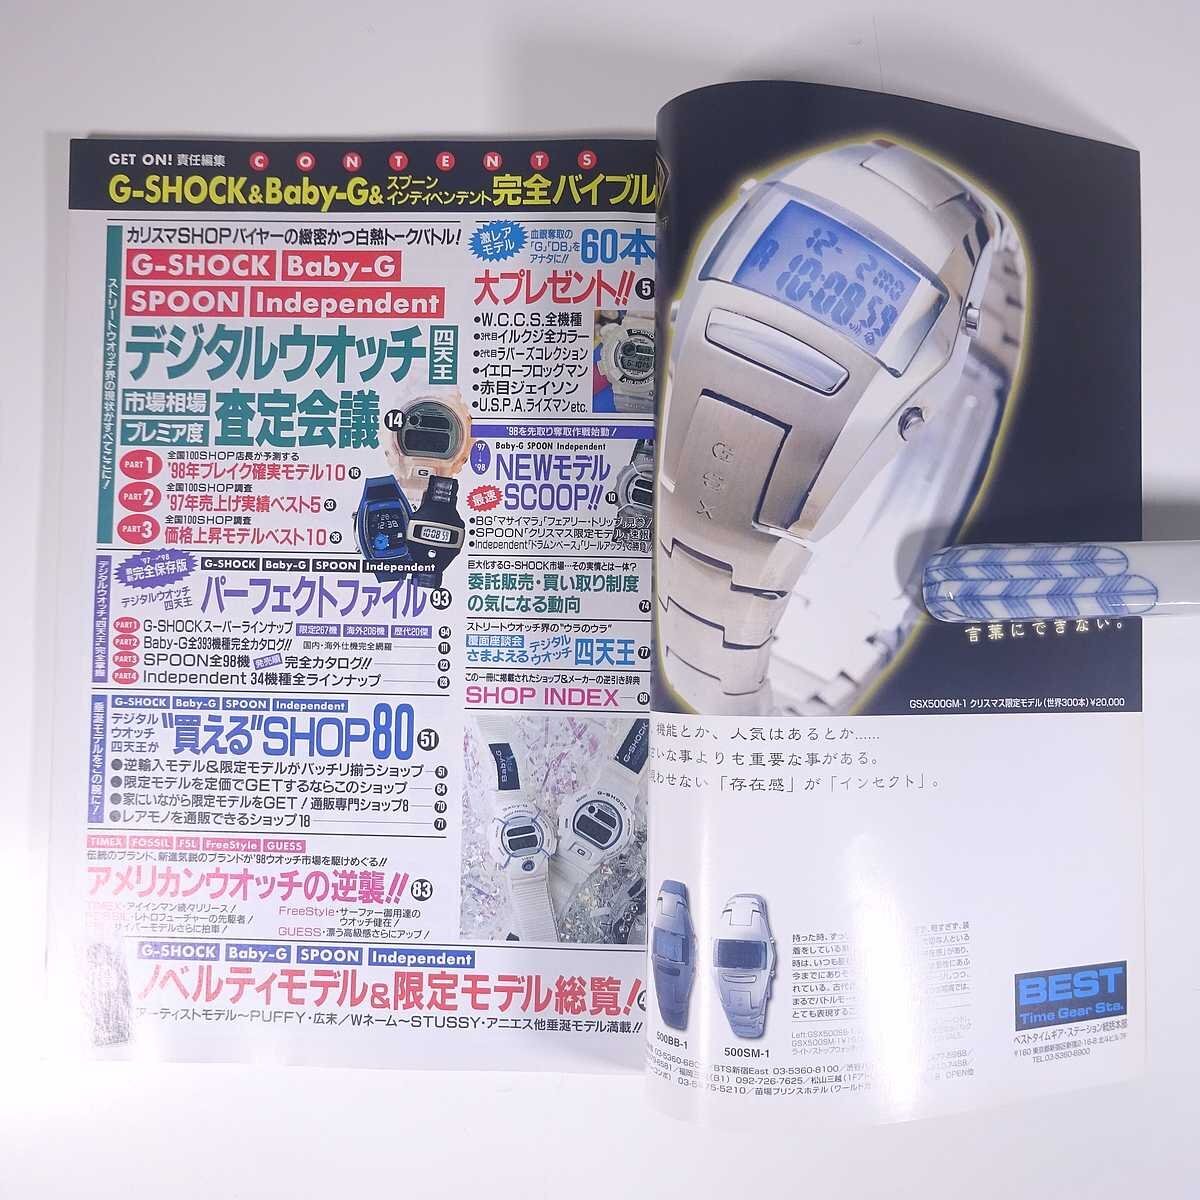 G-SHOCK ＆ Baby-G 完全バイブル Gakken 学研 学習研究社 1998 大型本 図版 図録 カタログ 腕時計 ウォッチ G-SHOCK Gショック_画像5